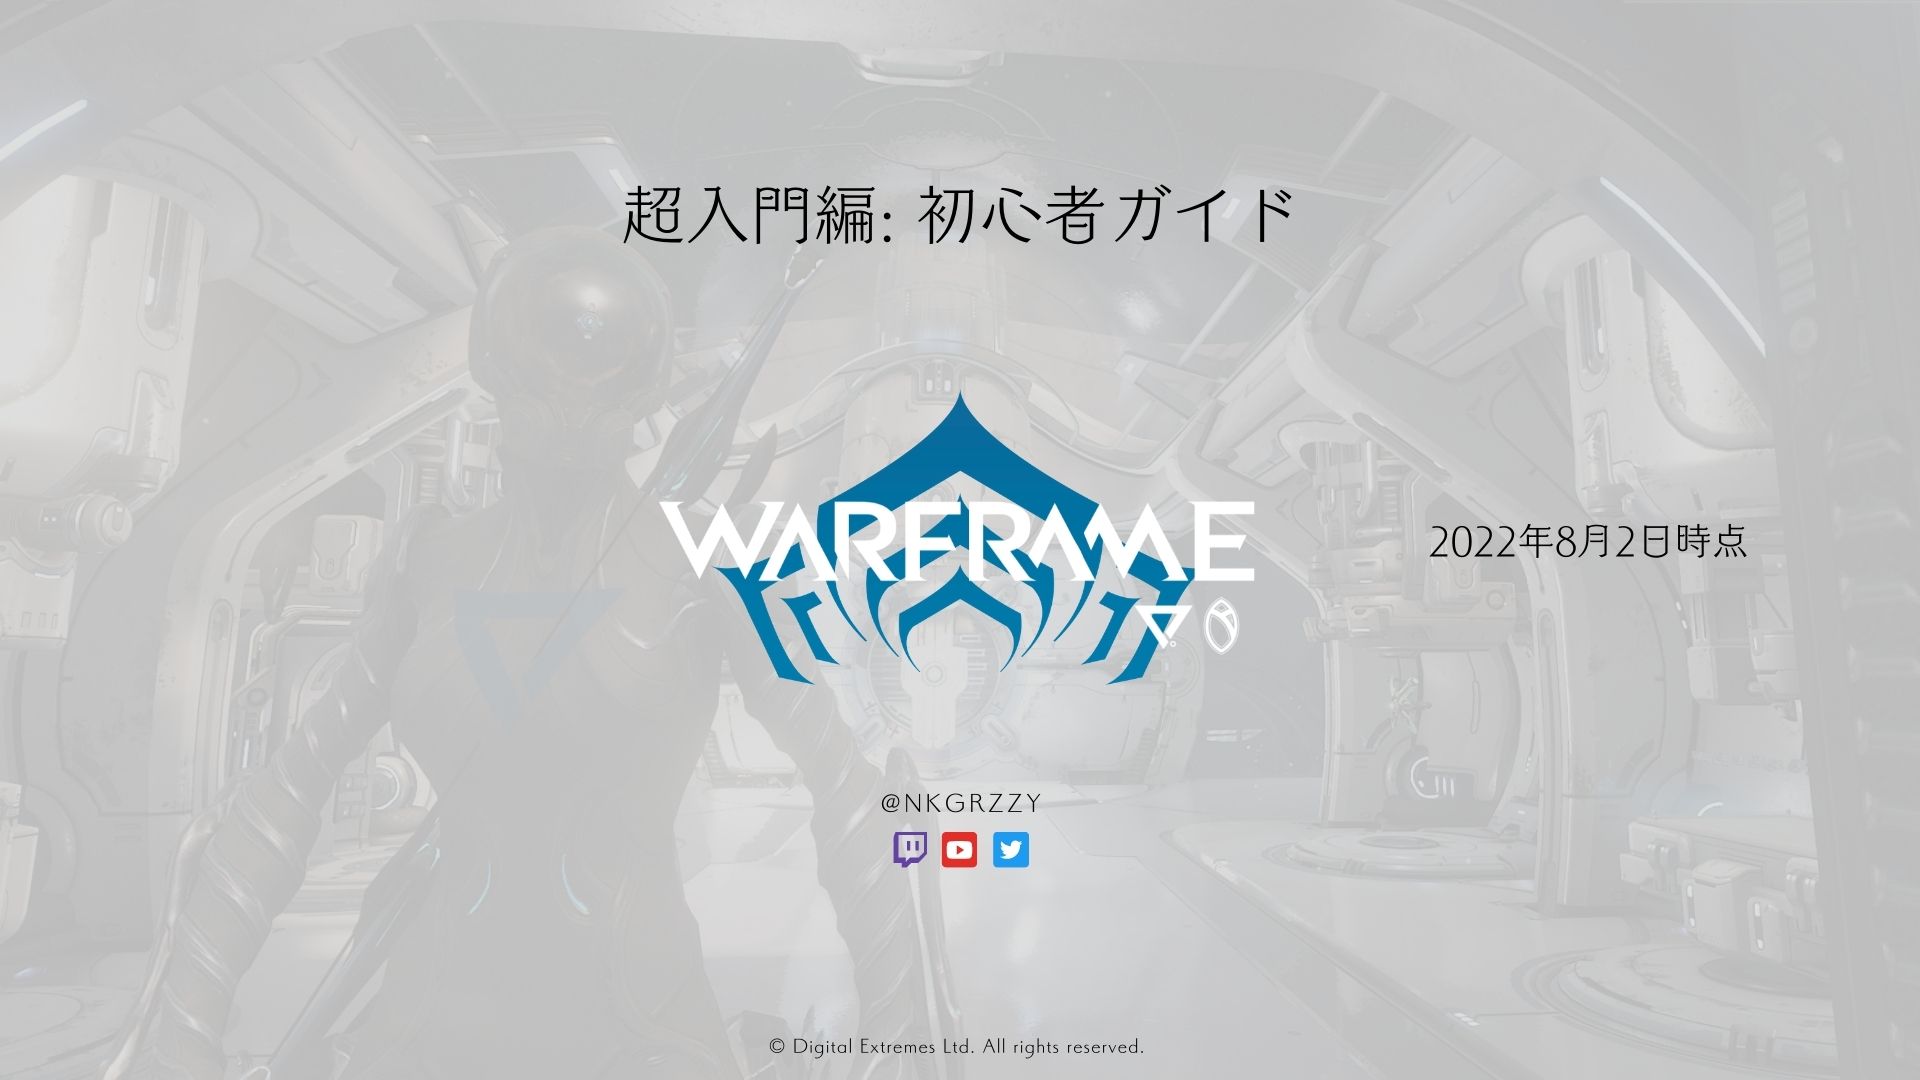 Warframe MOD 集め・入所場所｜基礎系｜2021年8月8日時点・作成中